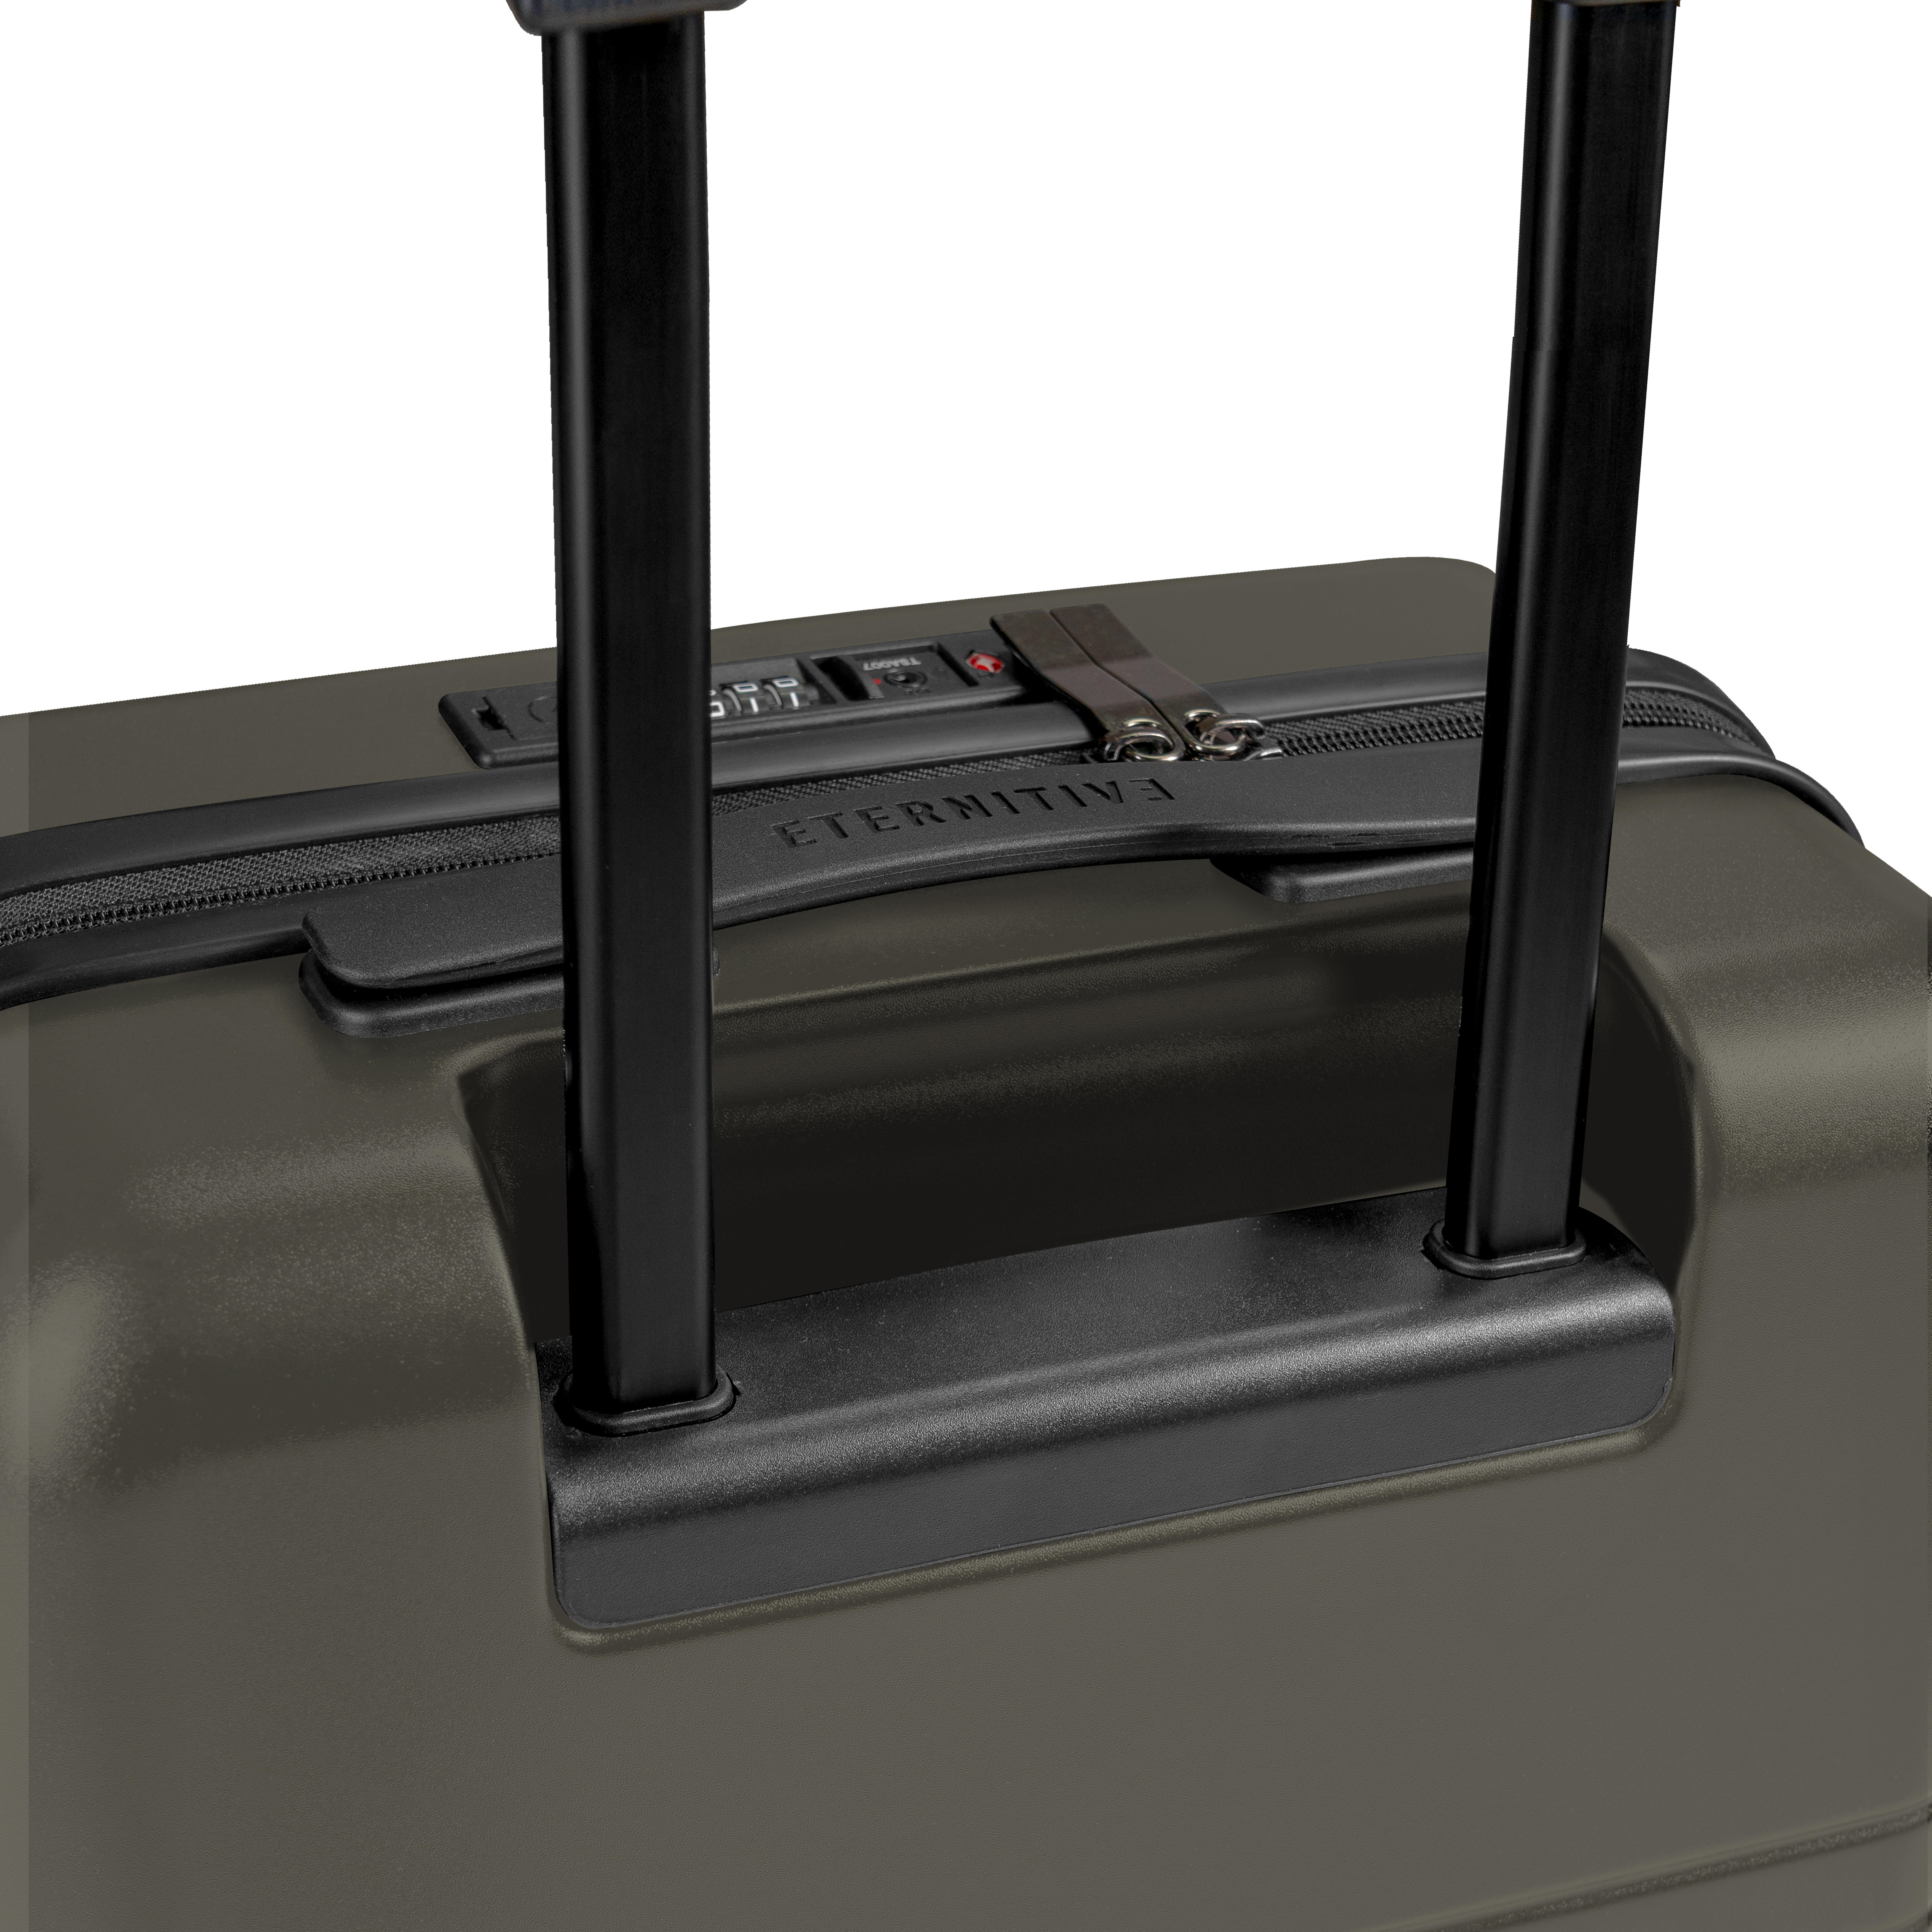 E3 Koffer set 2 teilig: \n Handgepäck + Mittelgroßer Koffer Olivgrün